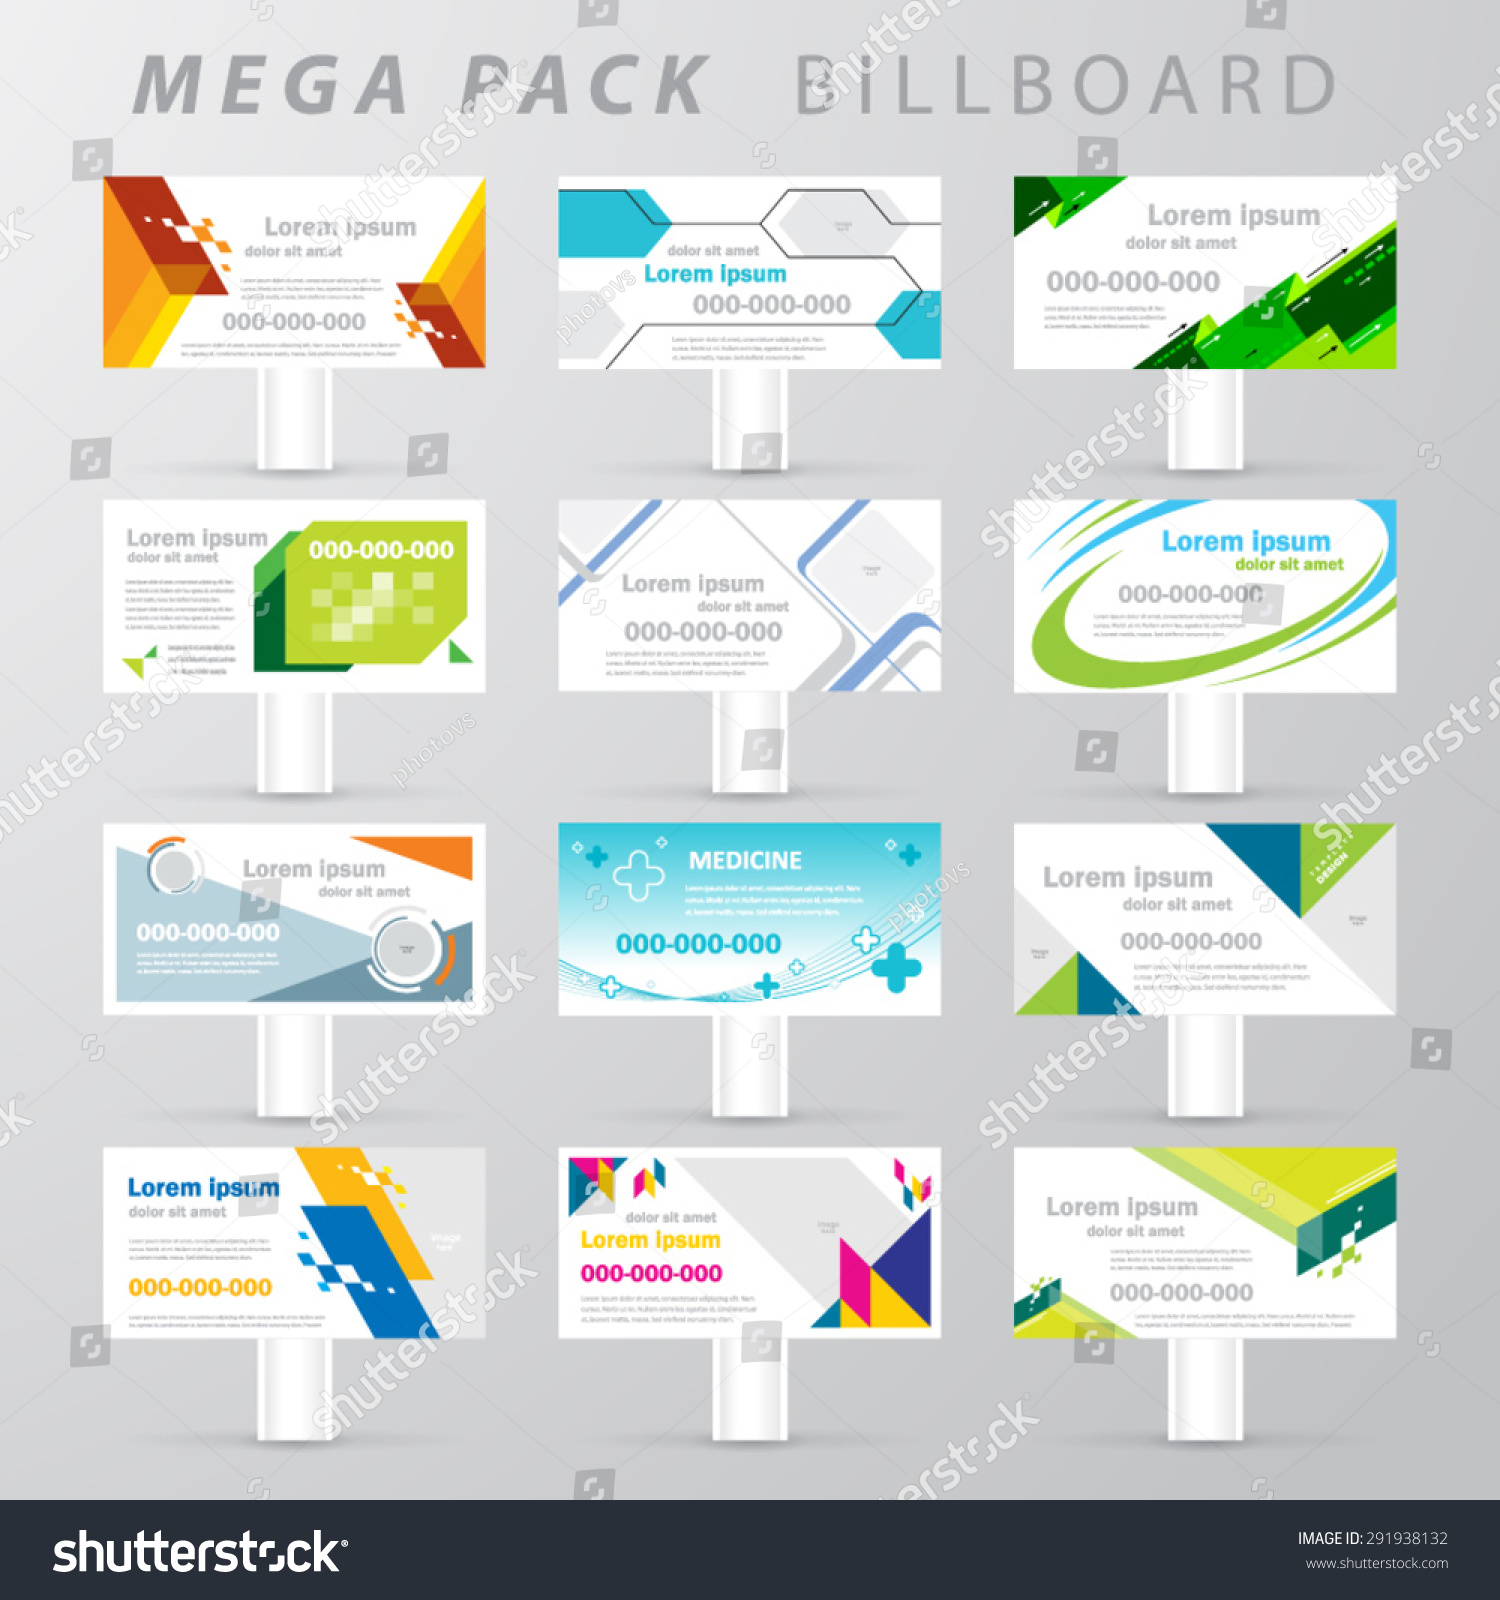 clipart design mega pack - photo #30